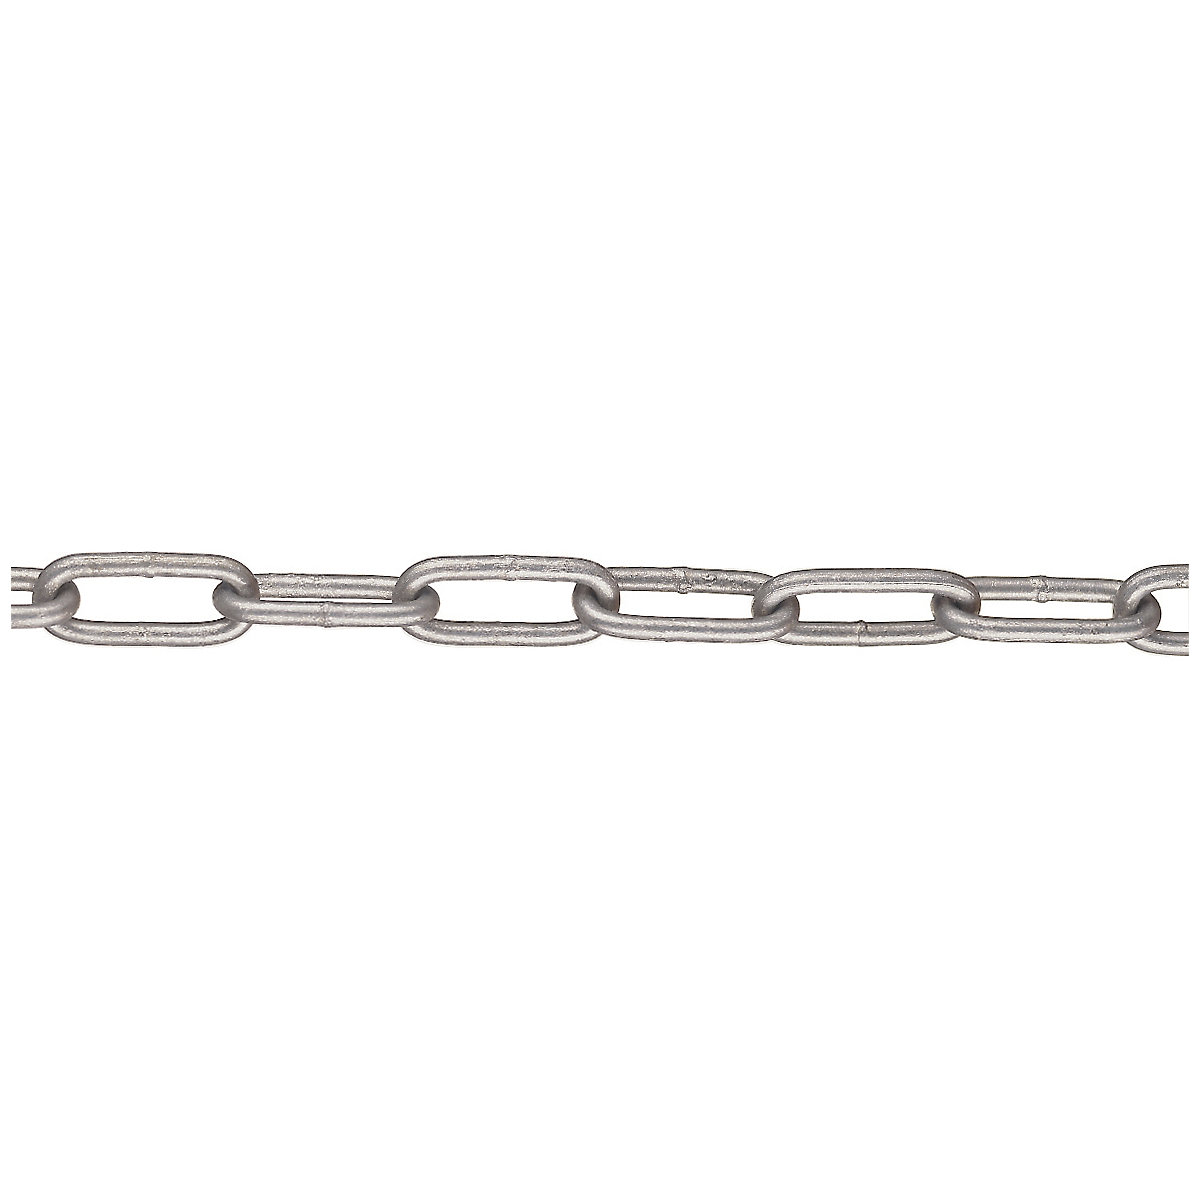 Steel link chain